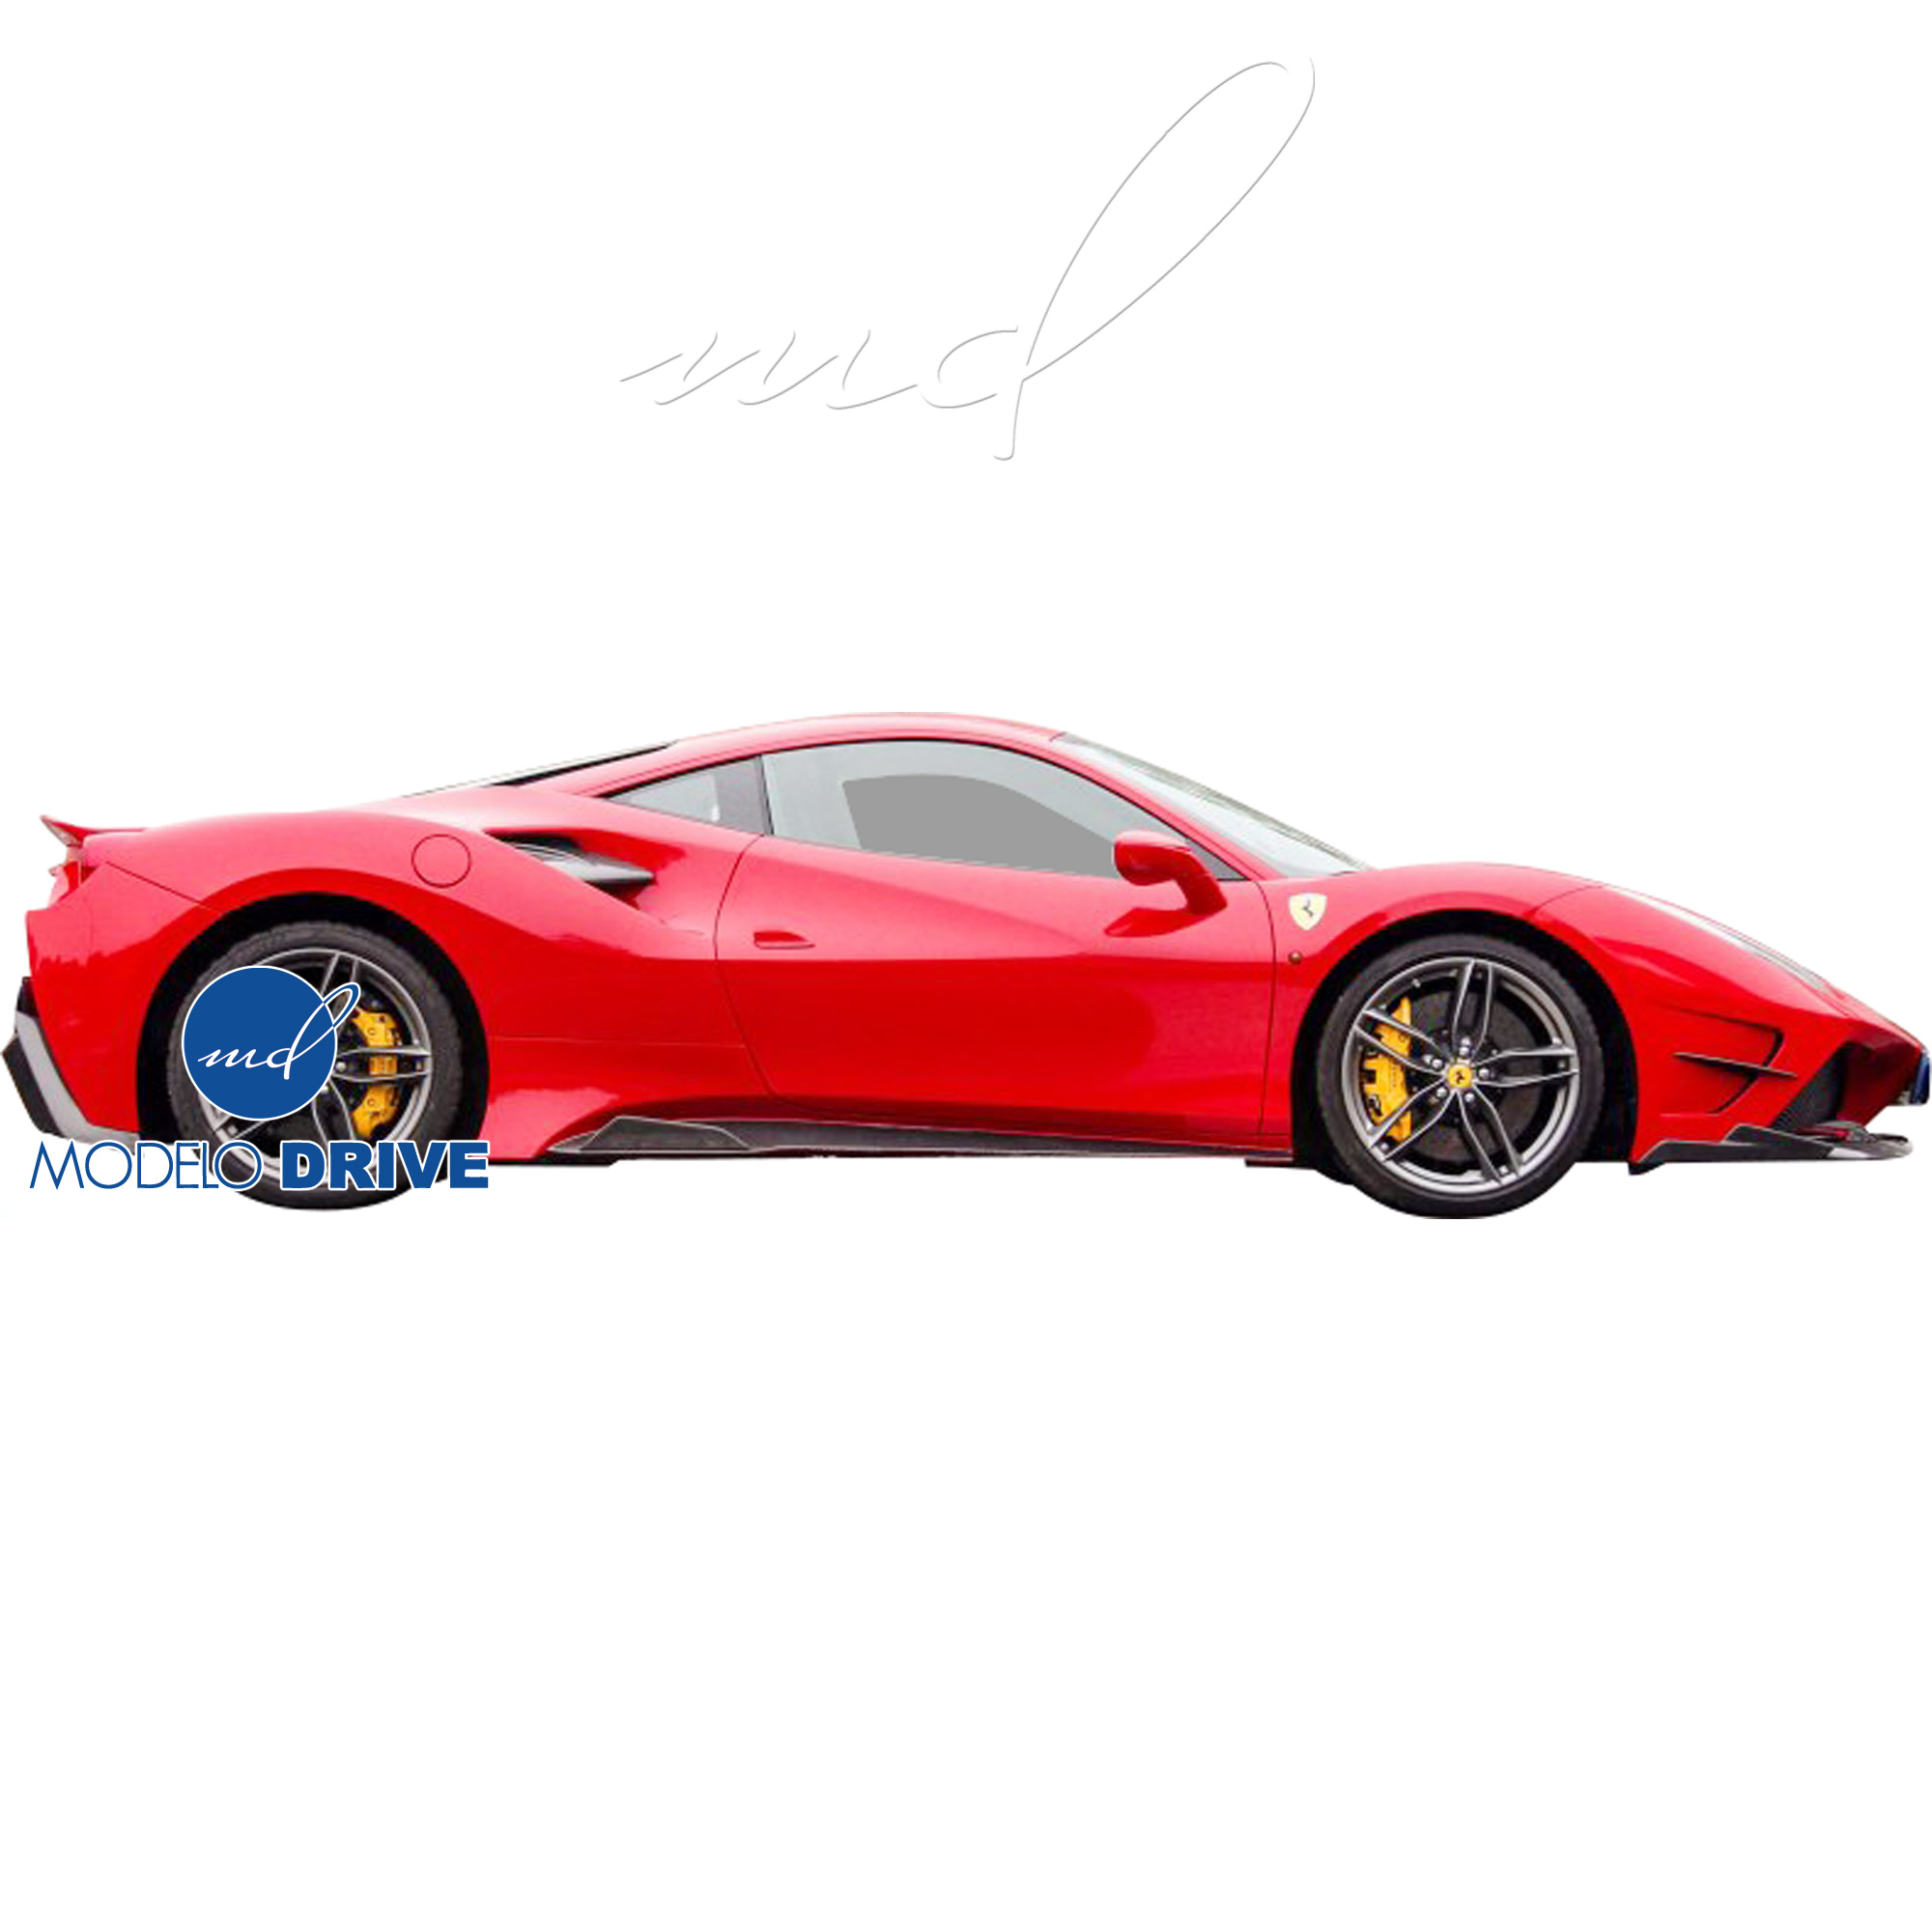 ModeloDrive Partial Carbon Fiber MDES Side Skirts > Ferrari 488 GTB F142M 2016-2019 - Image 7